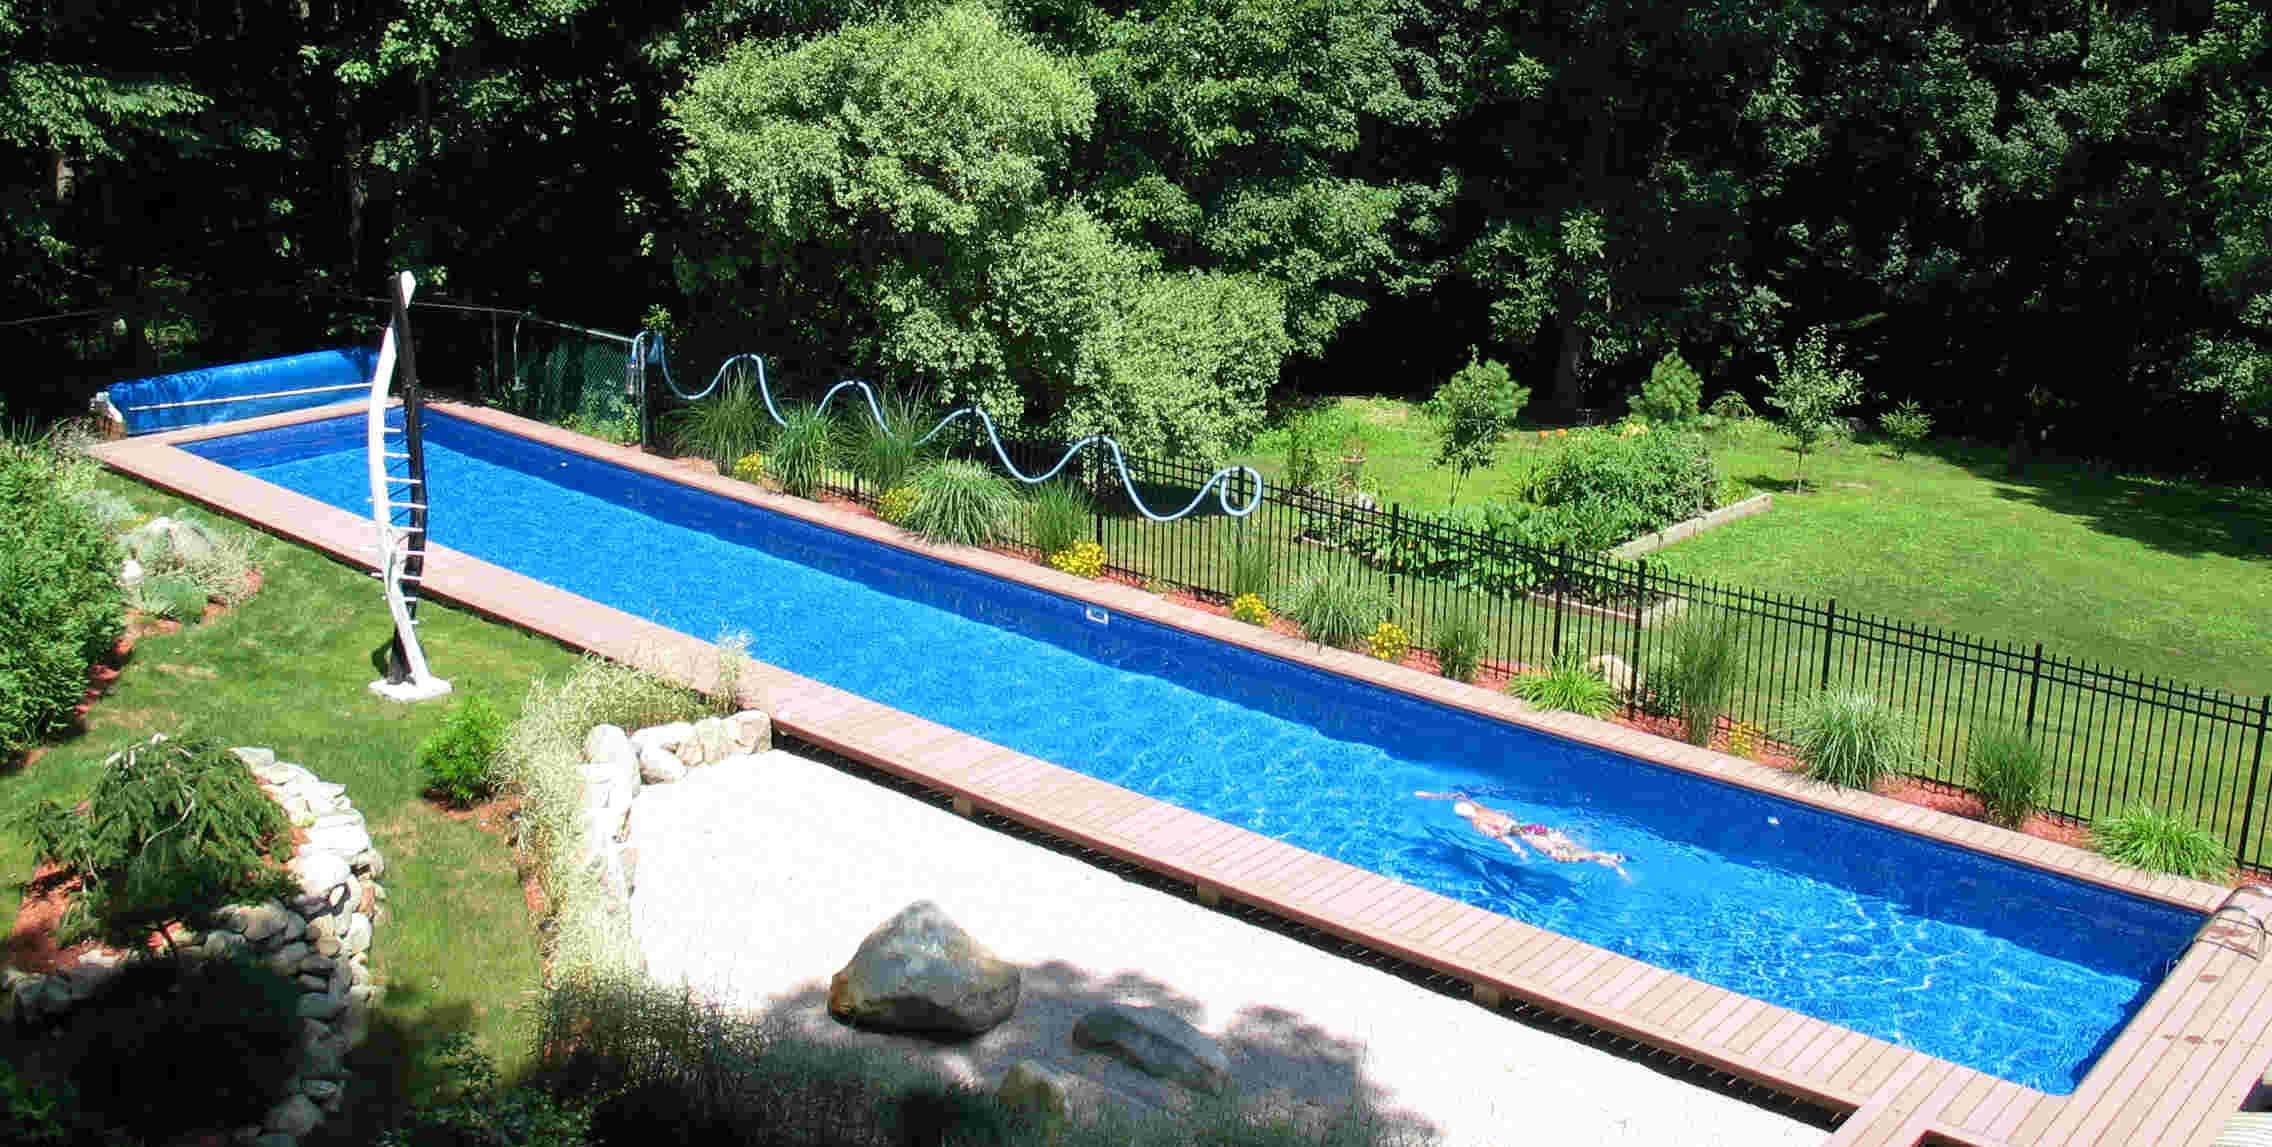 Best ideas about DIY Backyard Pools
. Save or Pin DIY Inground Swimming Pool Now.